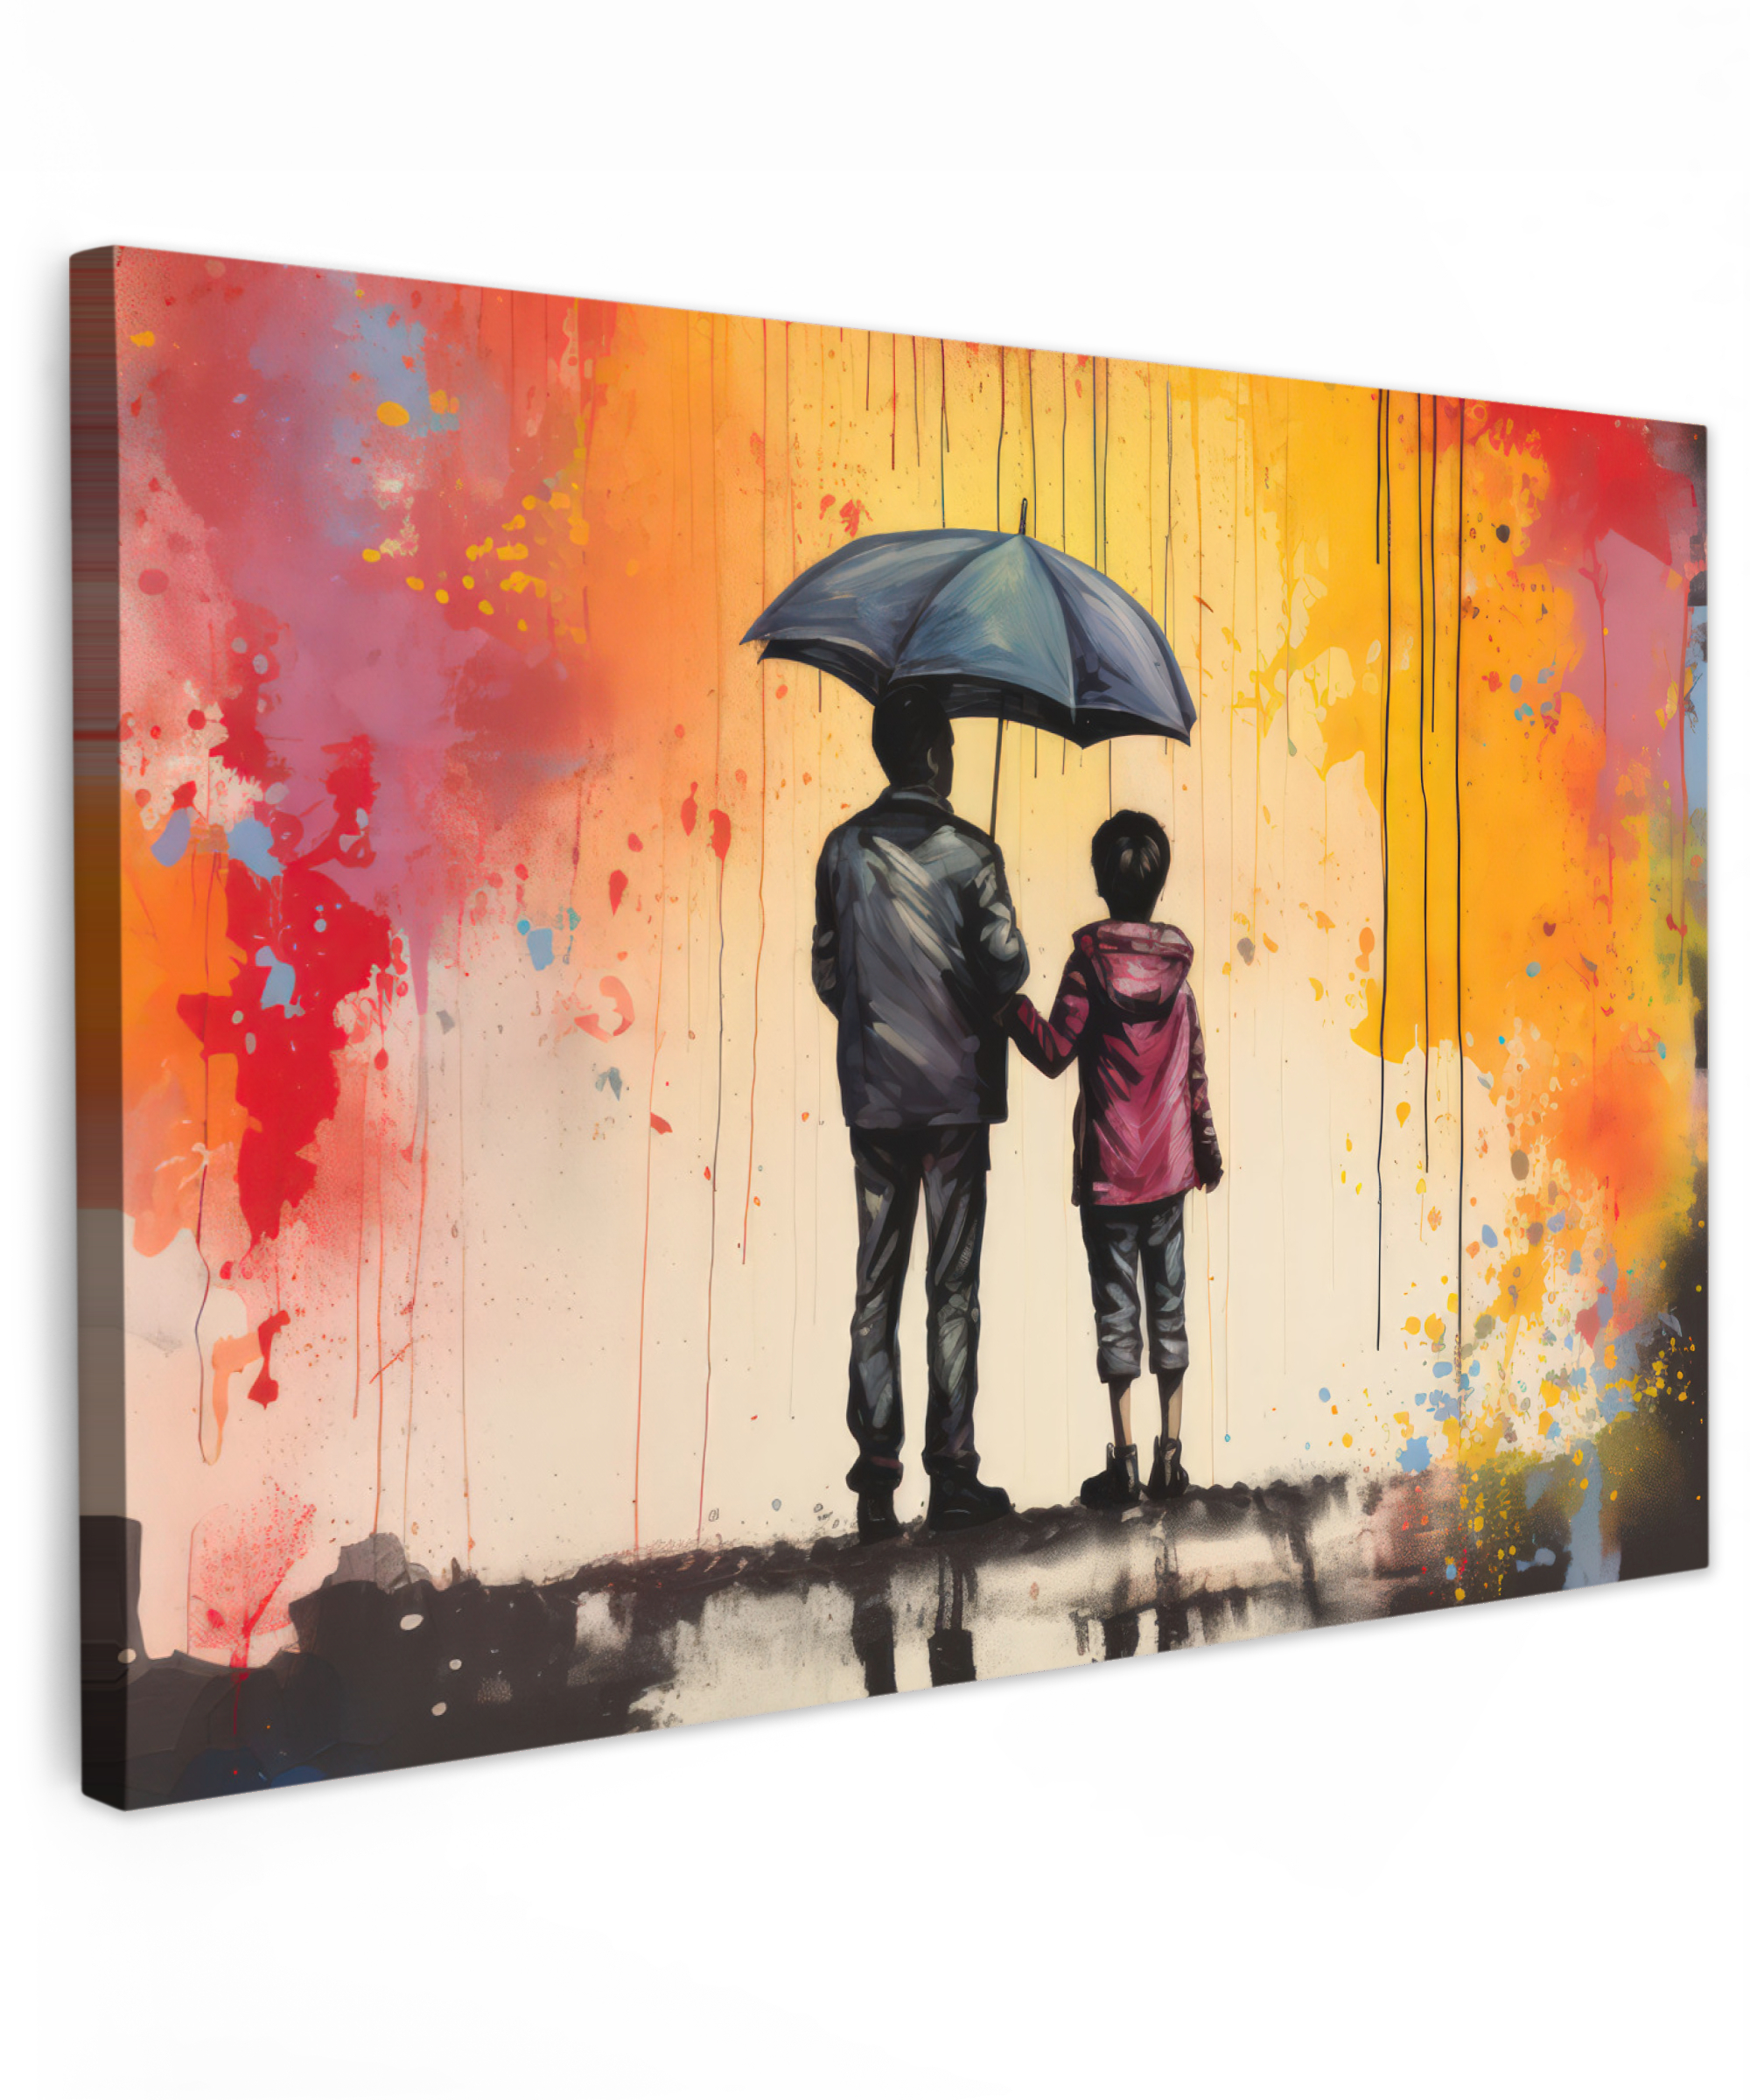 Canvas schilderij - Graffiti - Paraplu - Mensen - Kleuren - Kunst